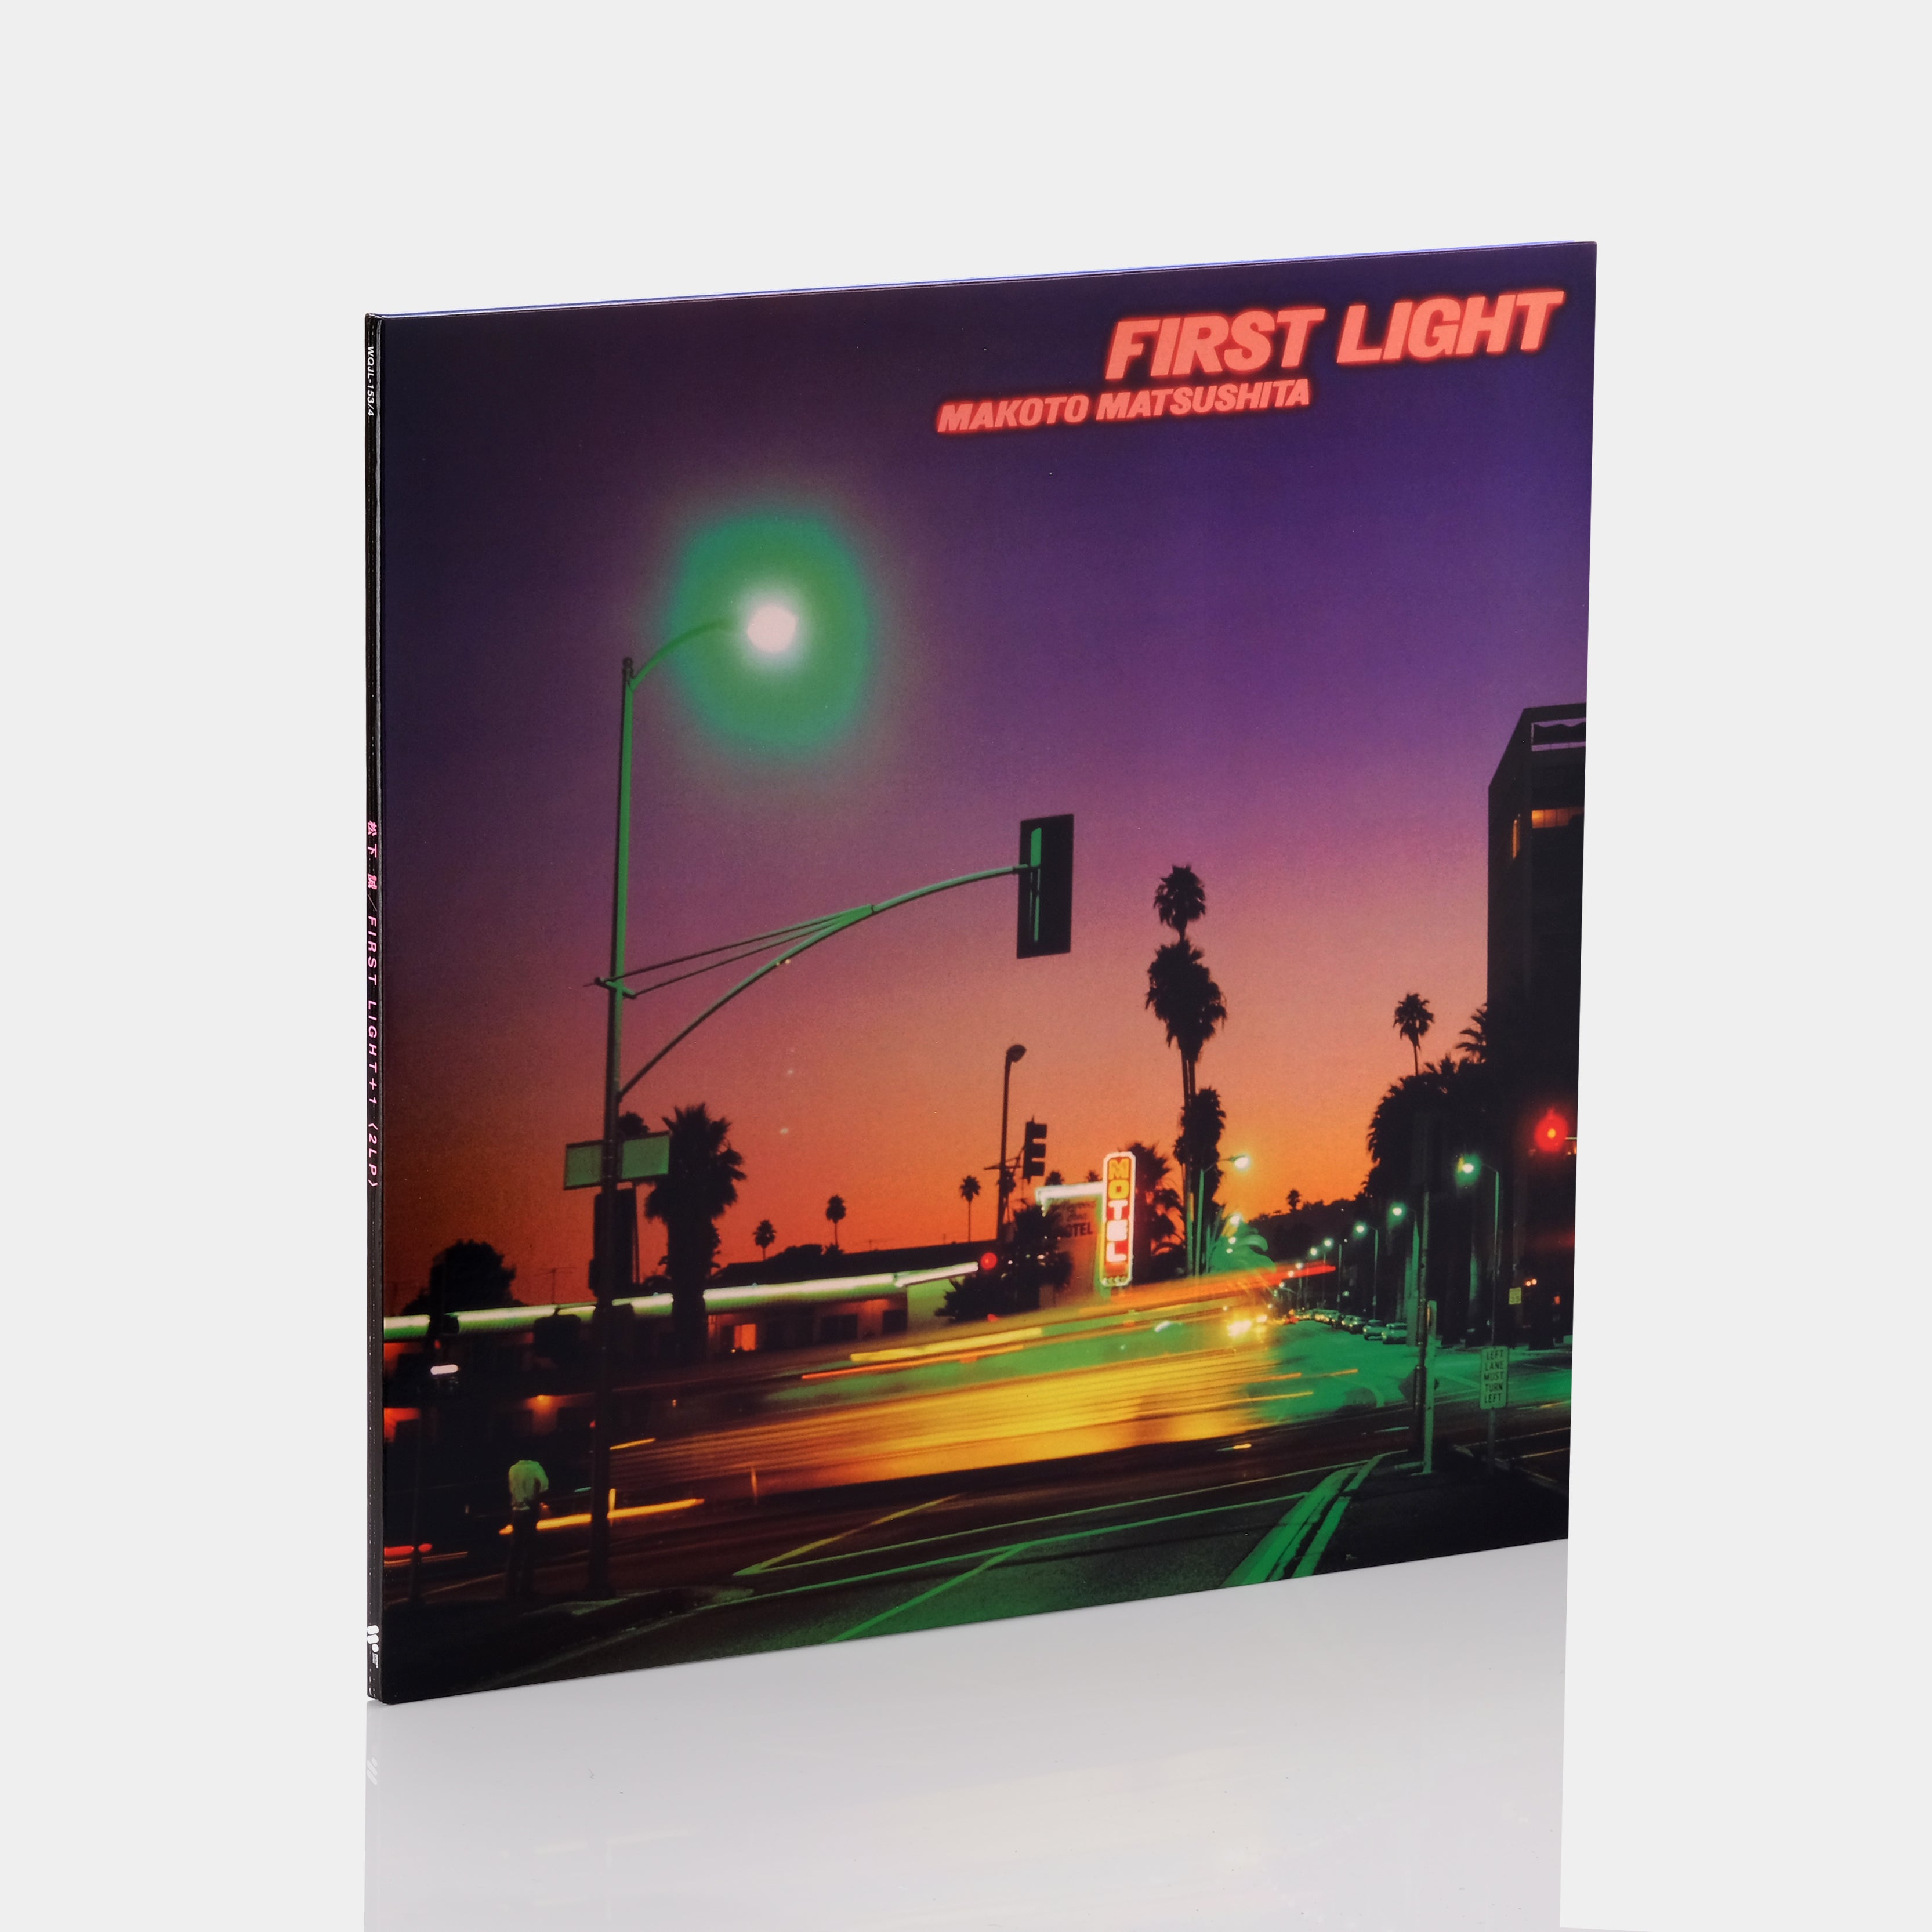 Makoto Matsushita - First Light 2xLP Vinyl Record